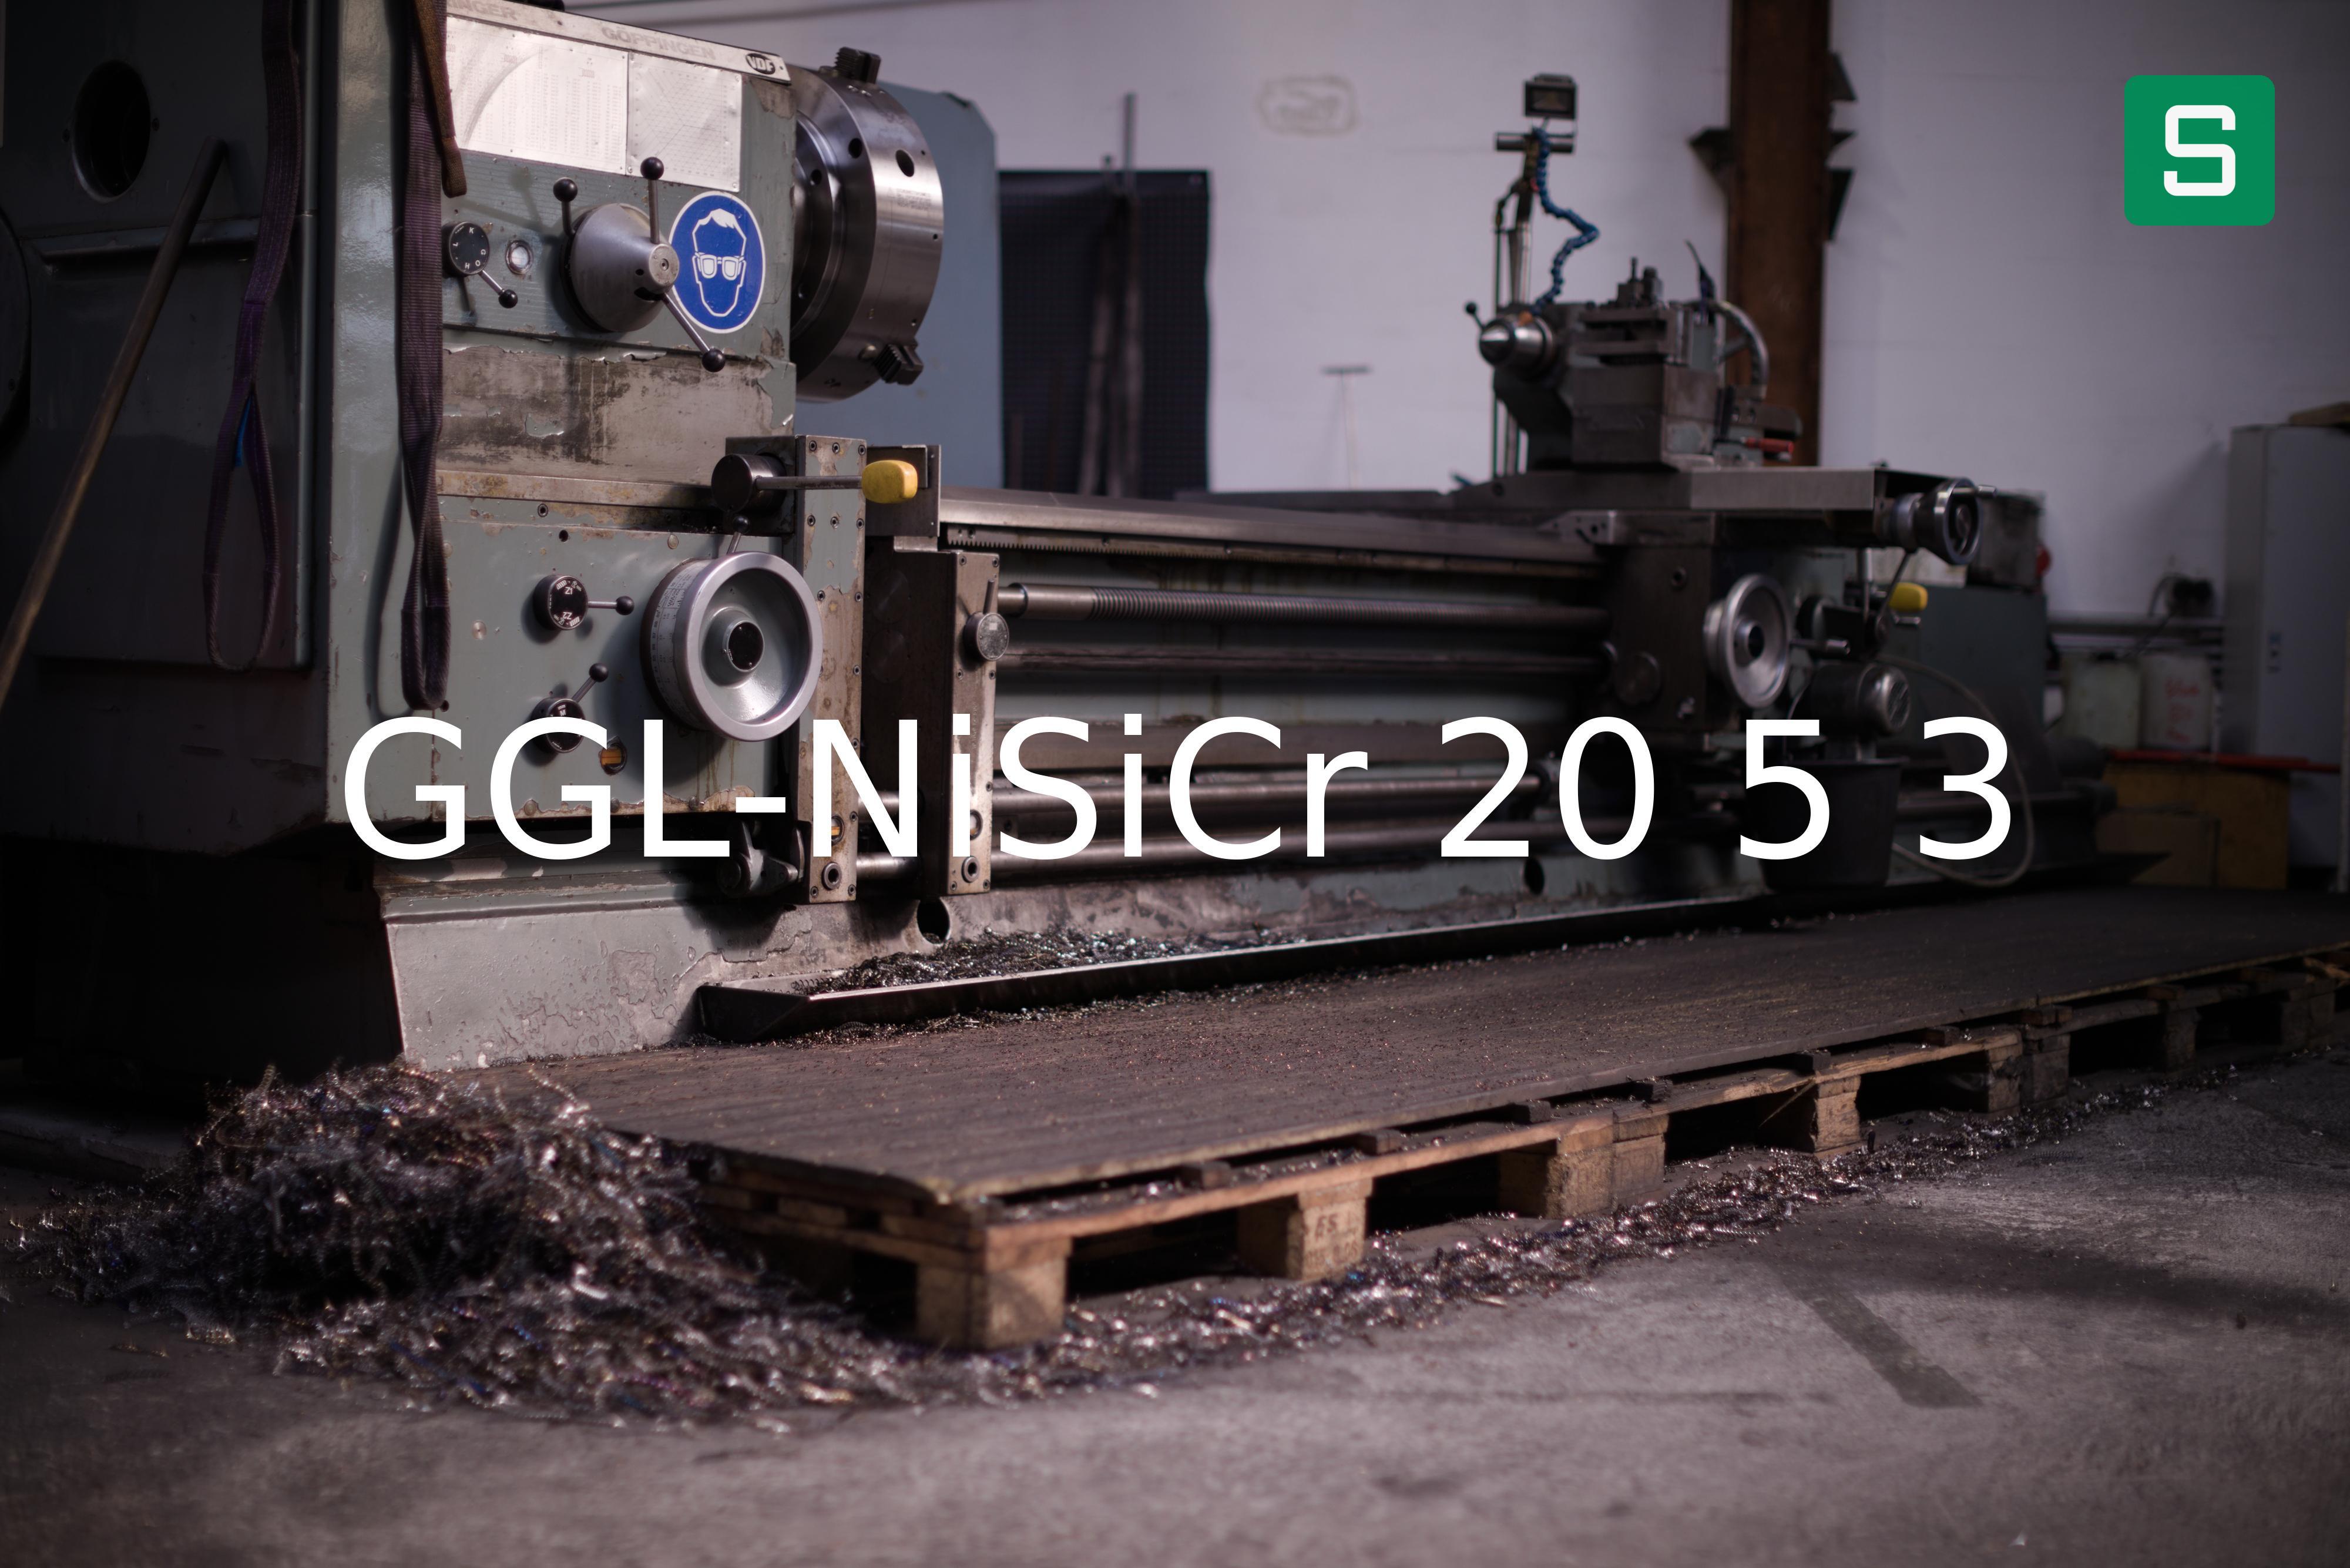 Steel Material: GGL-NiSiCr 20 5 3